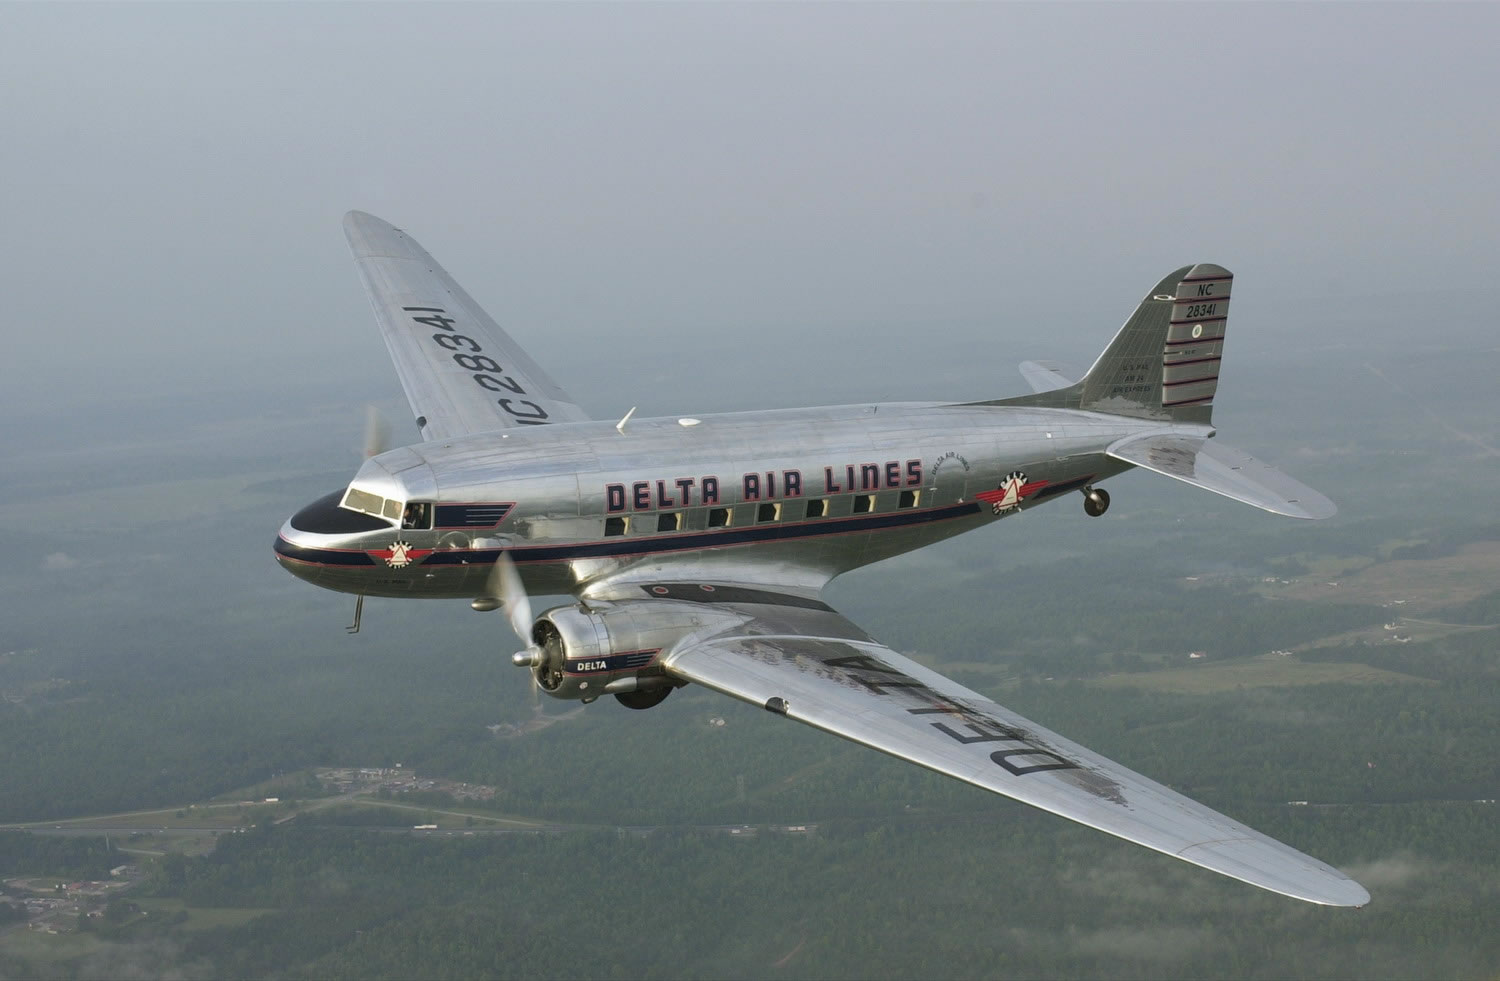 Douglas DC-3 next